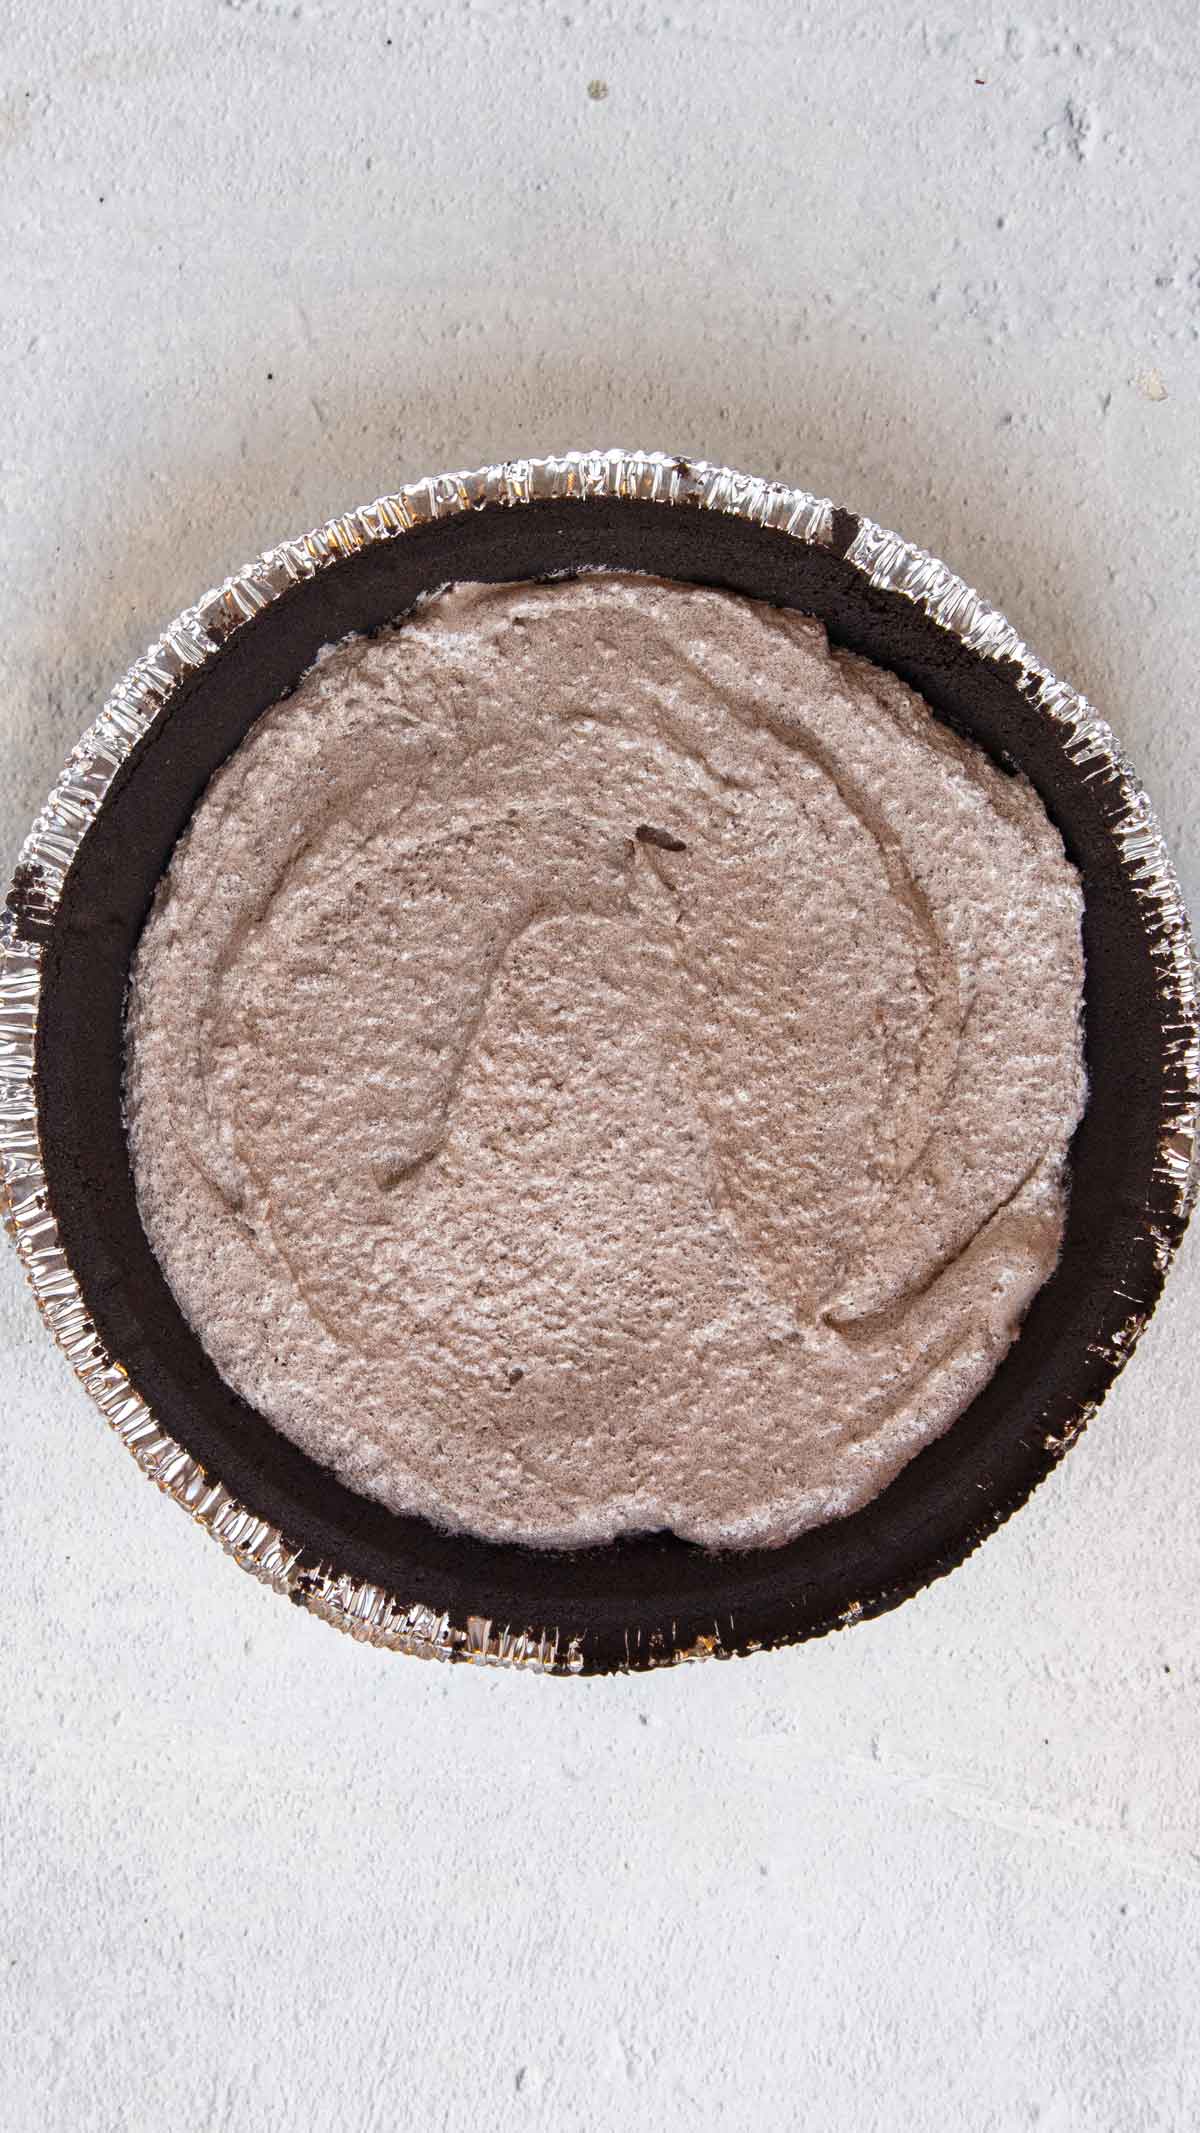 Oreo pie filling in an Oreo pie shell